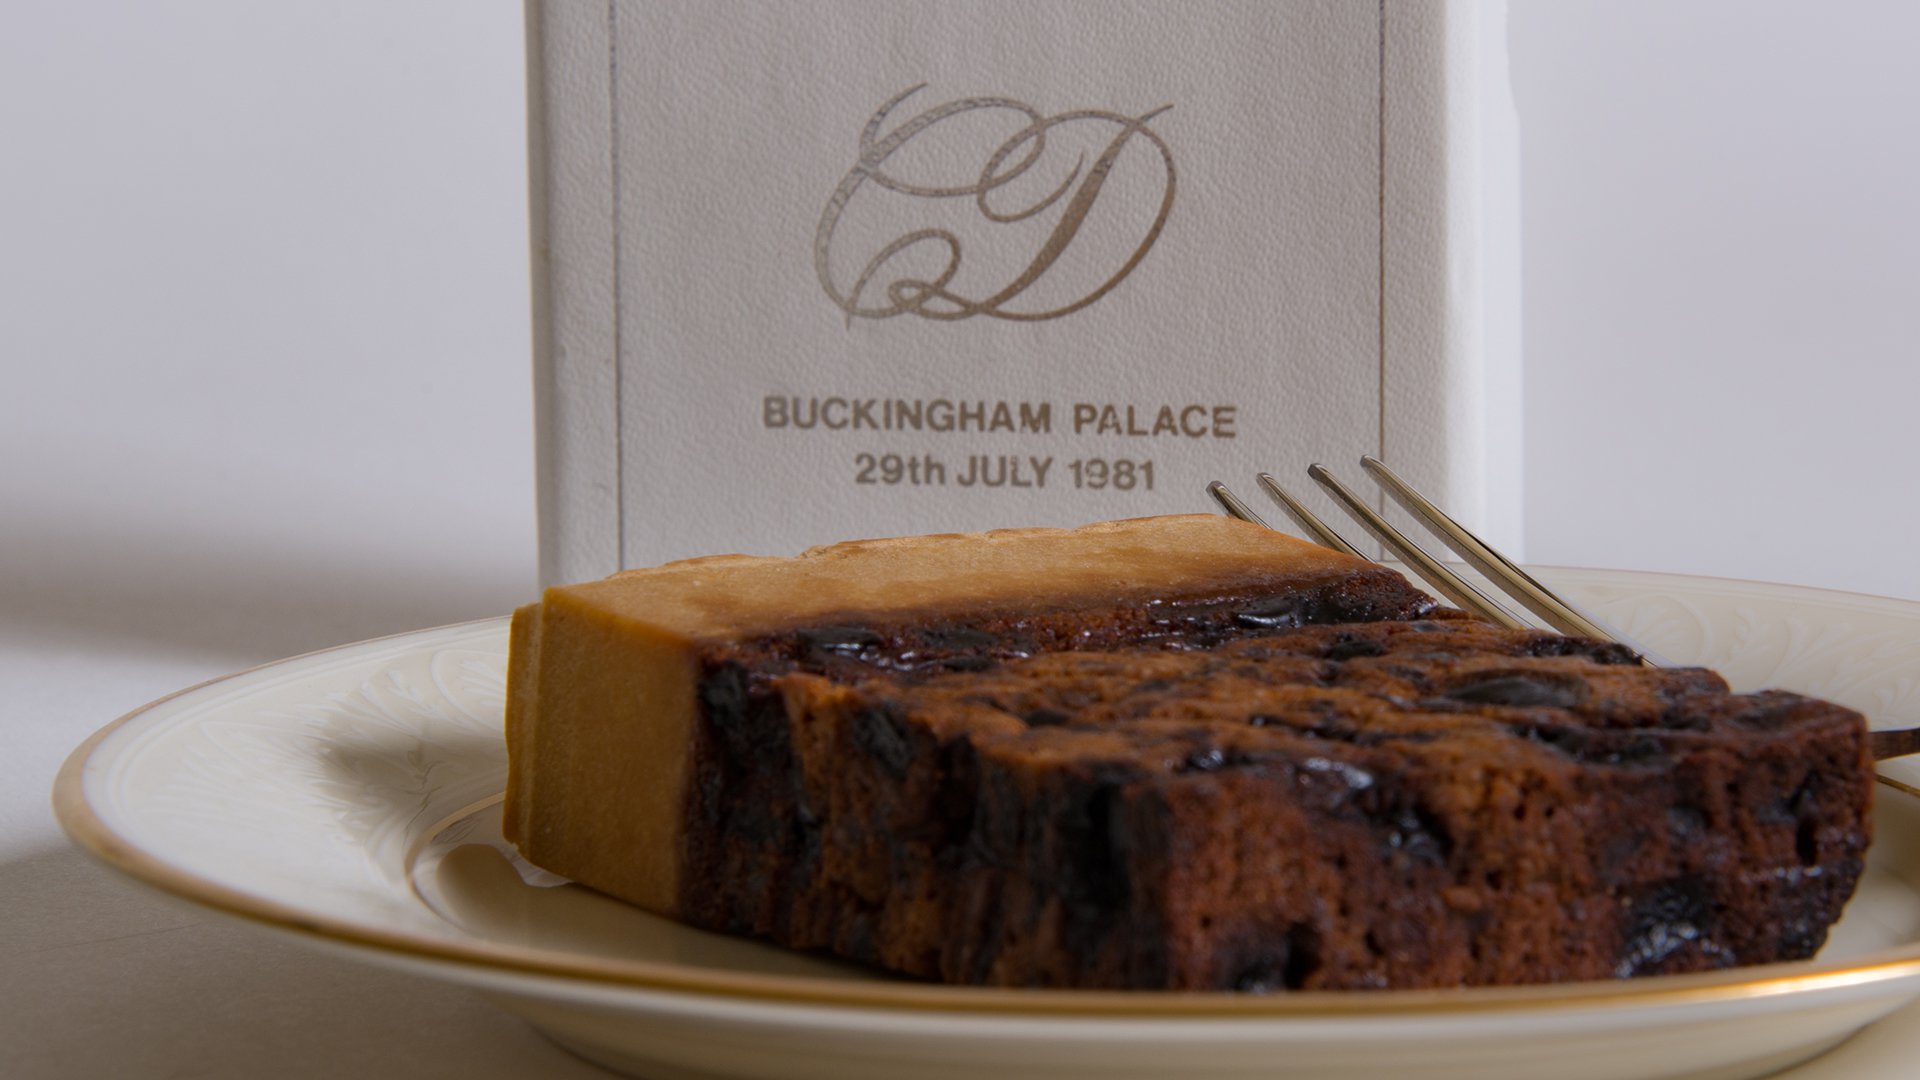 Image of the royal wedding cake 1981